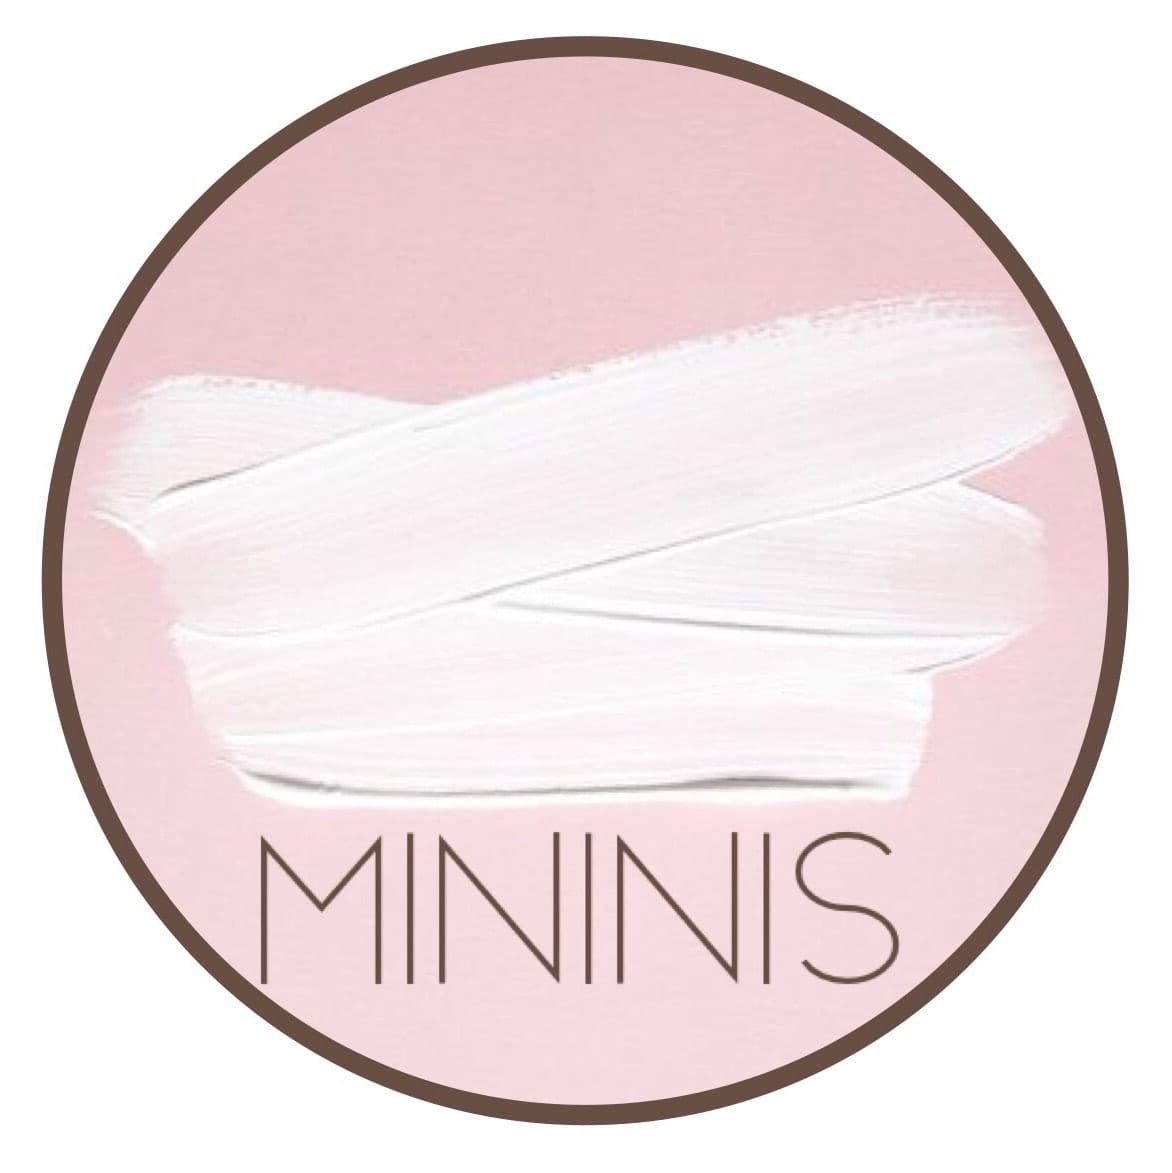 Mininis